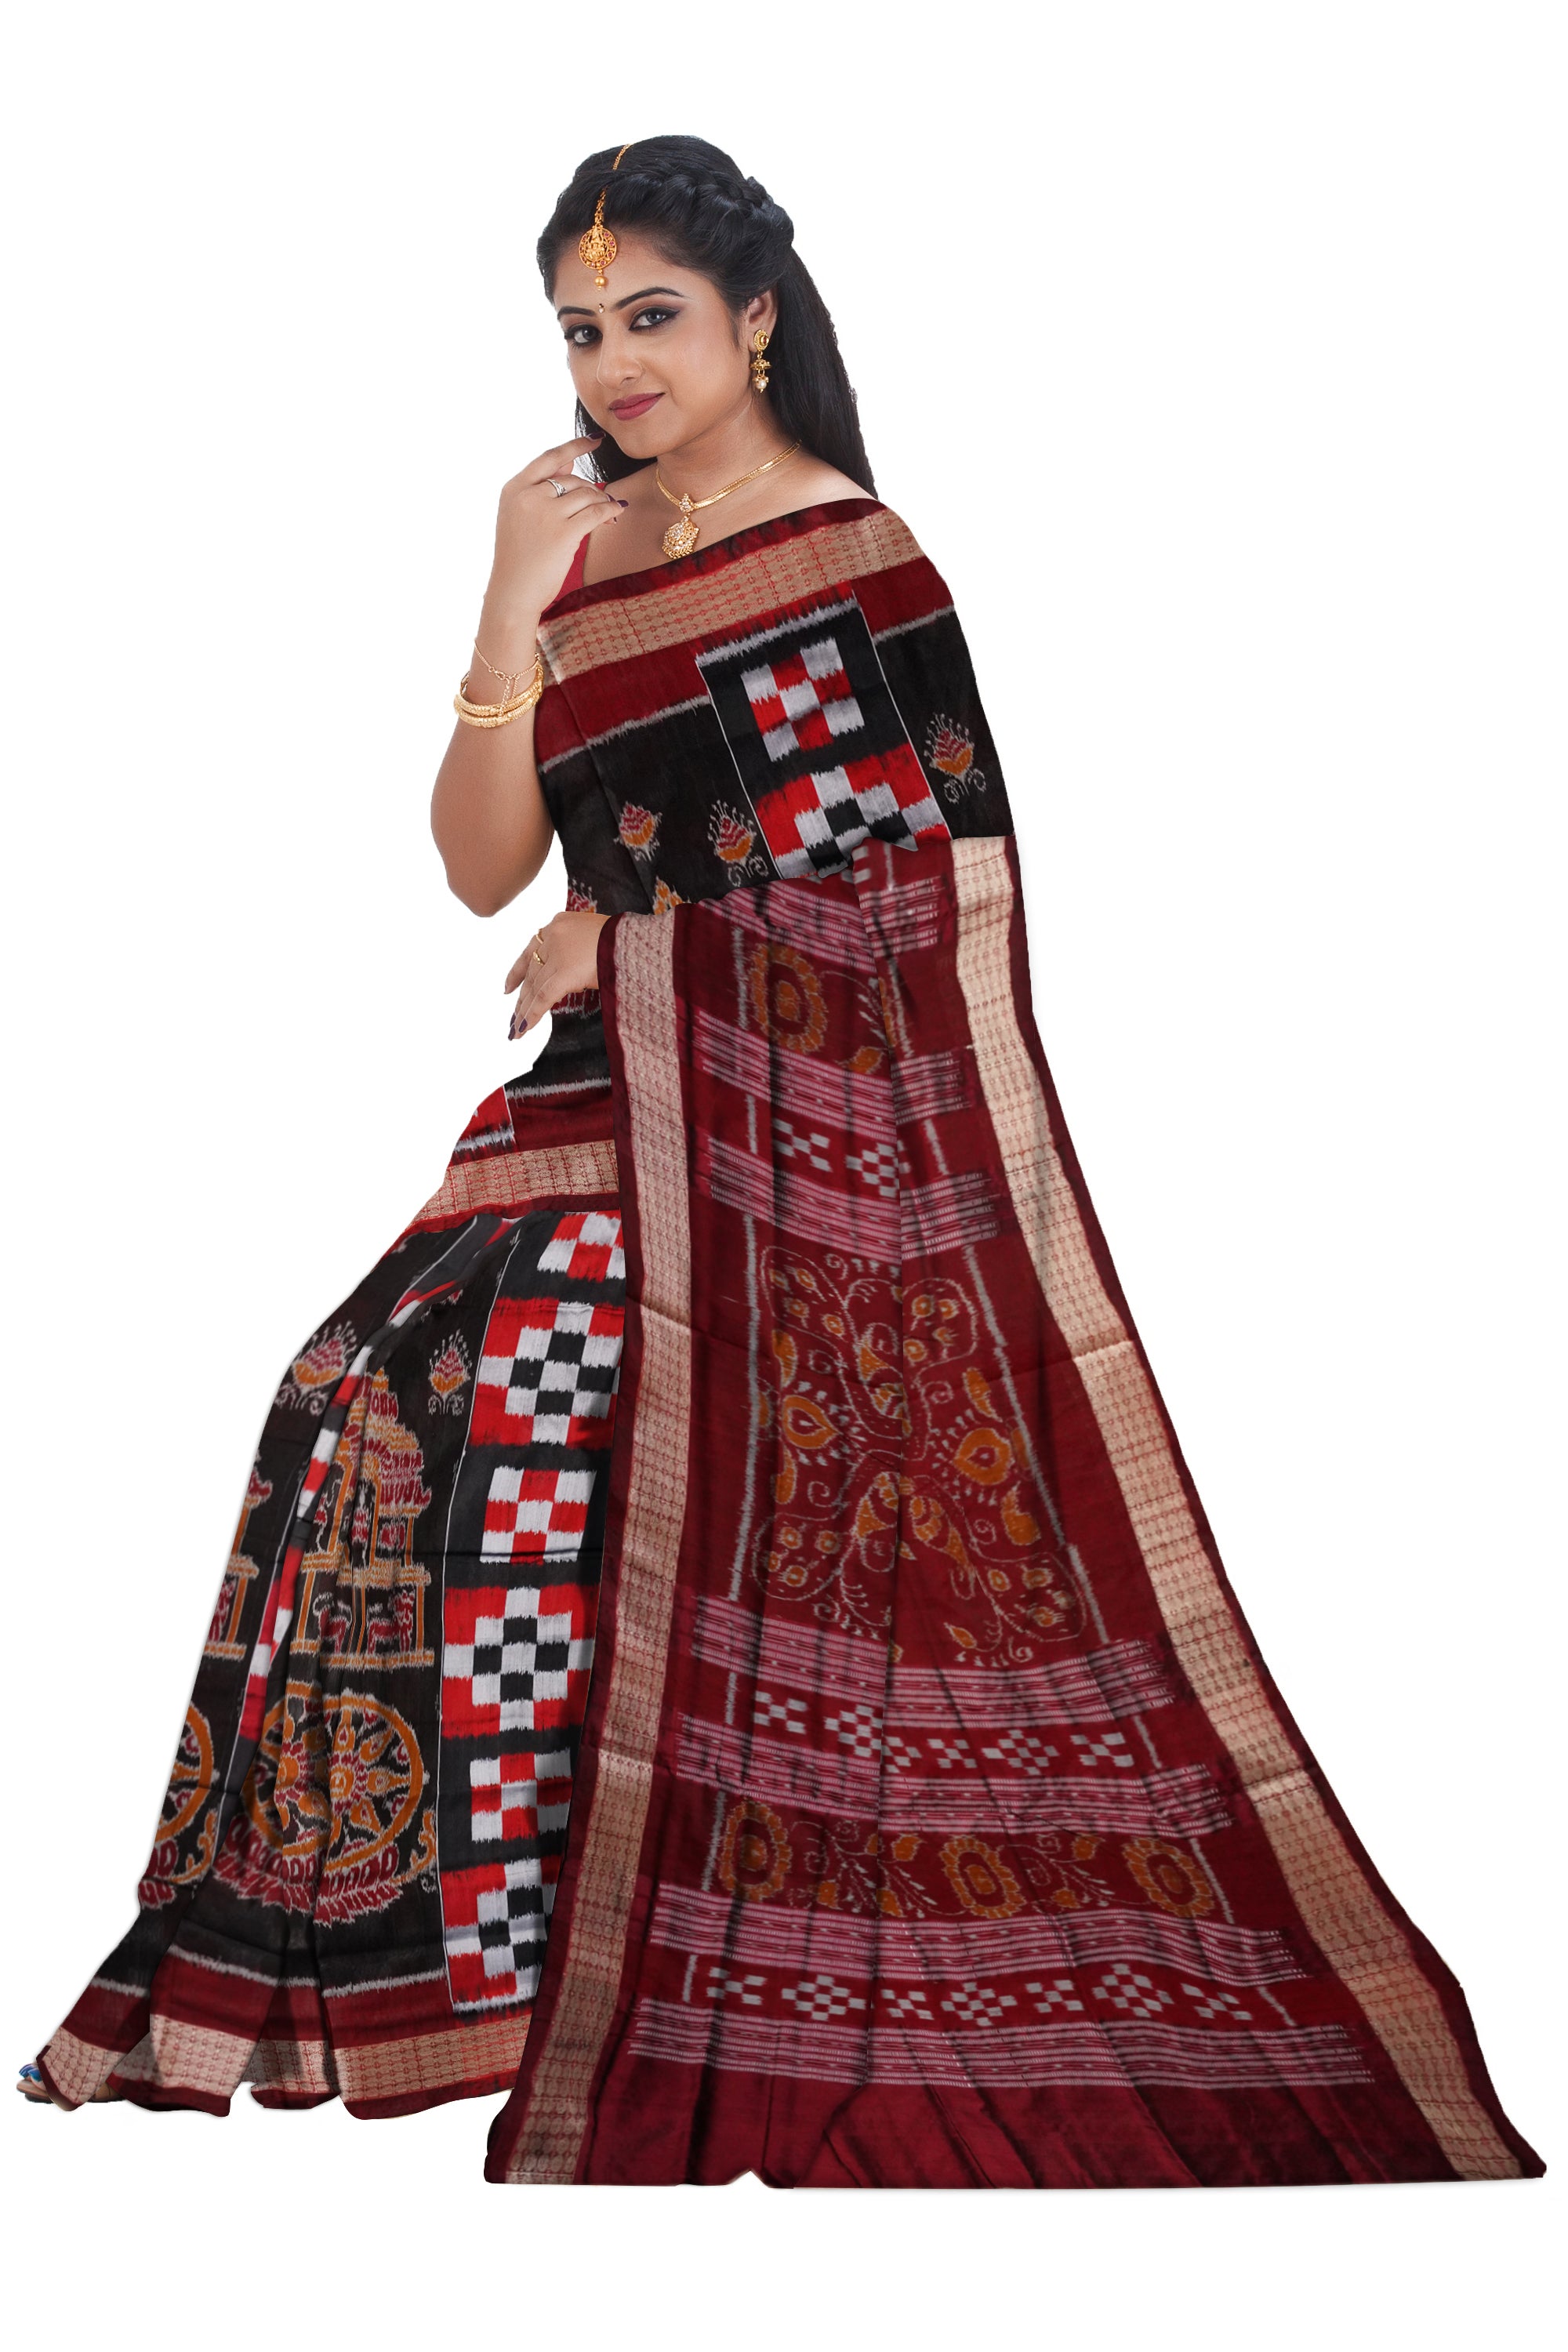 Konarka with Pasapali pattern Sambalpuri pata saree in Black,Maroon and Coffee color. - Koshali Arts & Crafts Enterprise